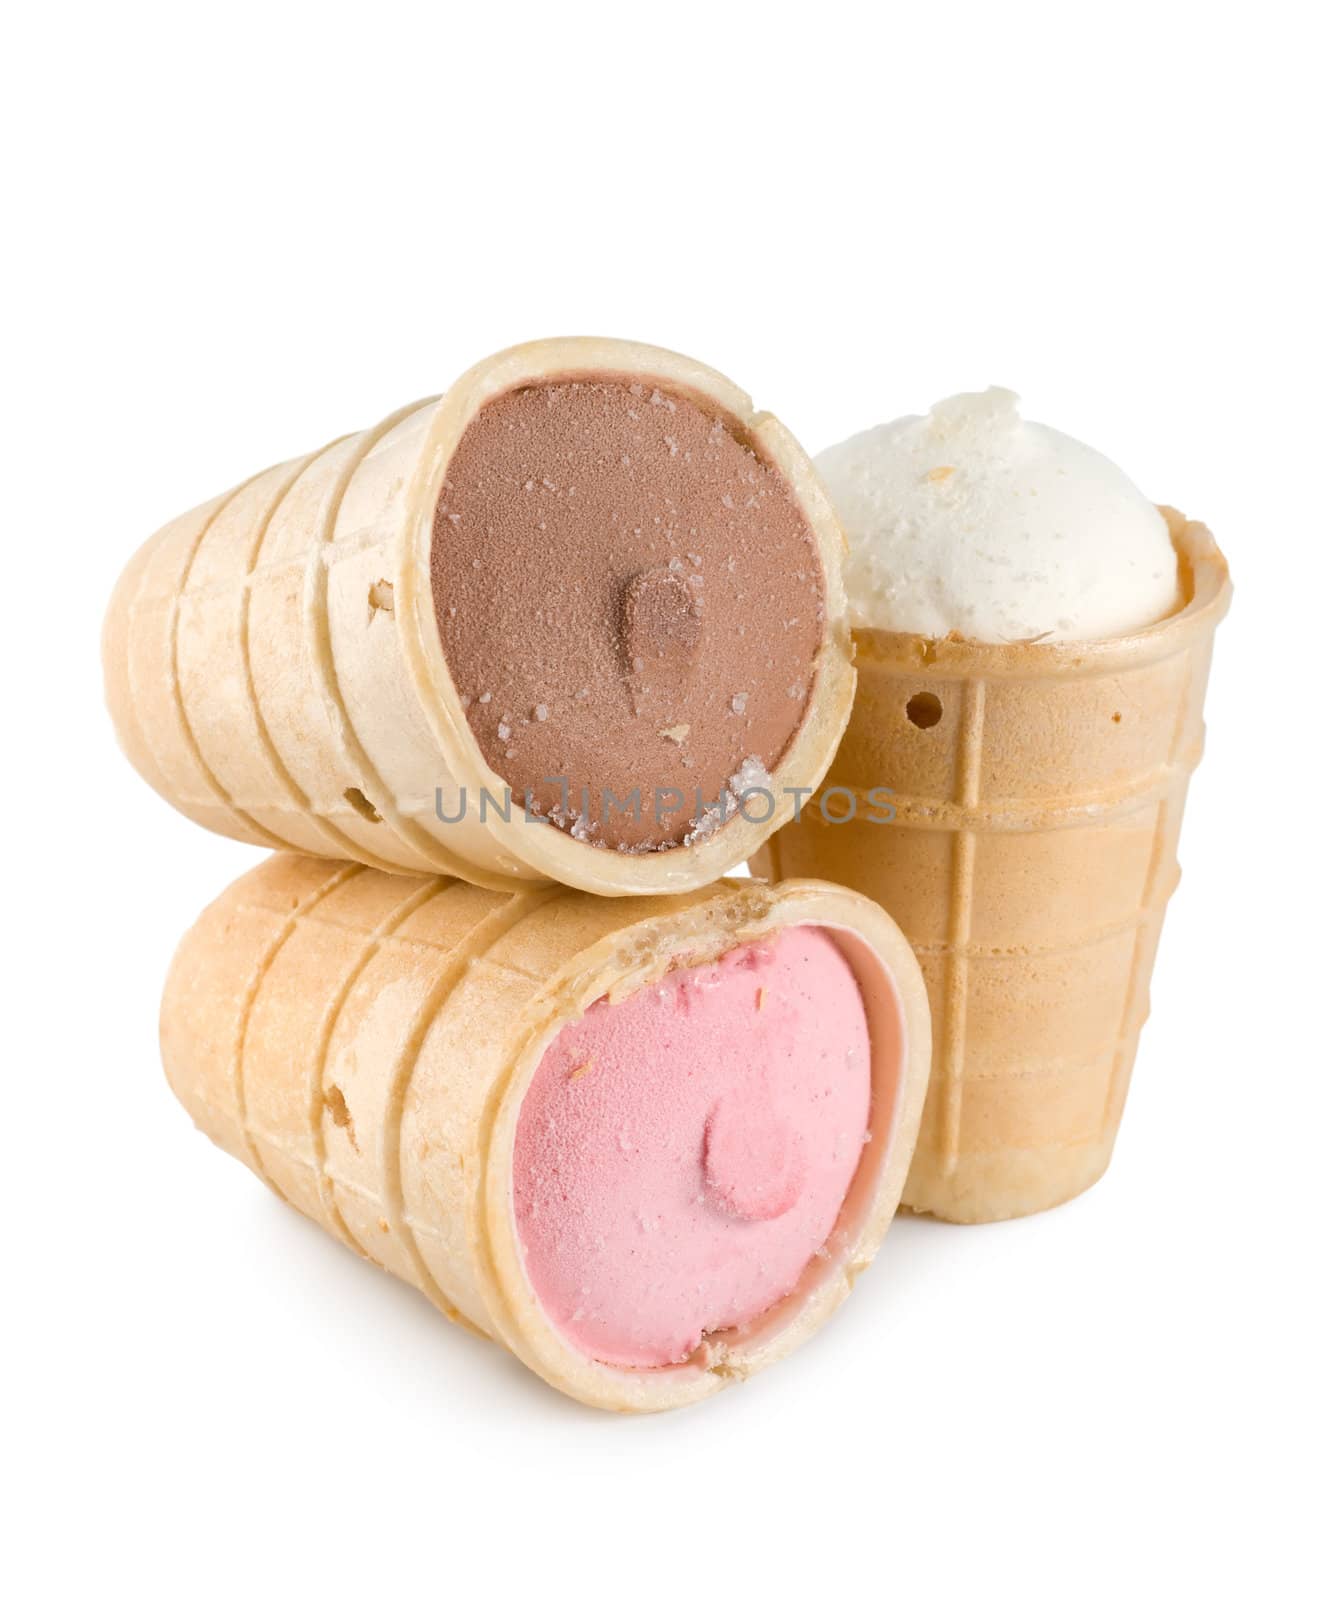 Three different flavors of ice cream cones... chocolate, vanilla, and strawberry 